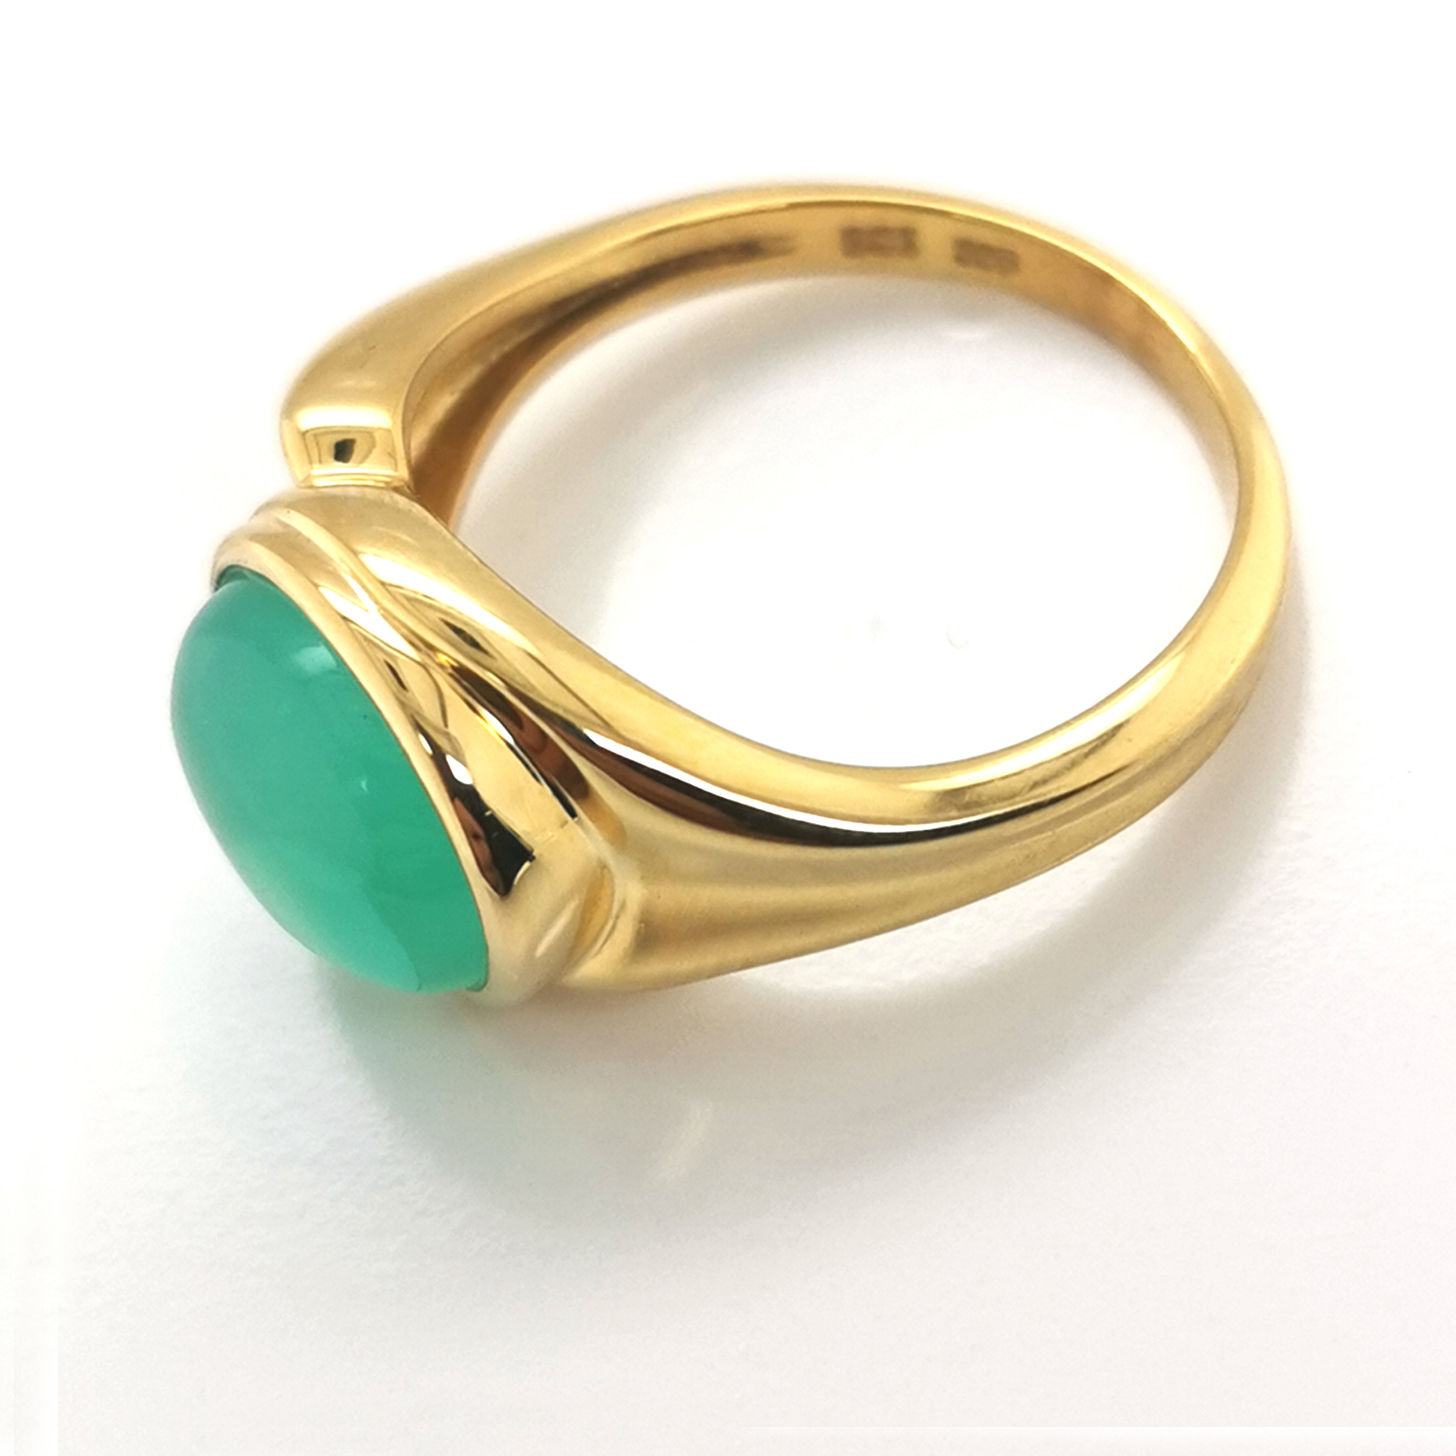 Peruanischer Opal, grün, ca. 3 ct Edelstein, 925/000 Silber vergoldet, Ring, Sogni d´oro 